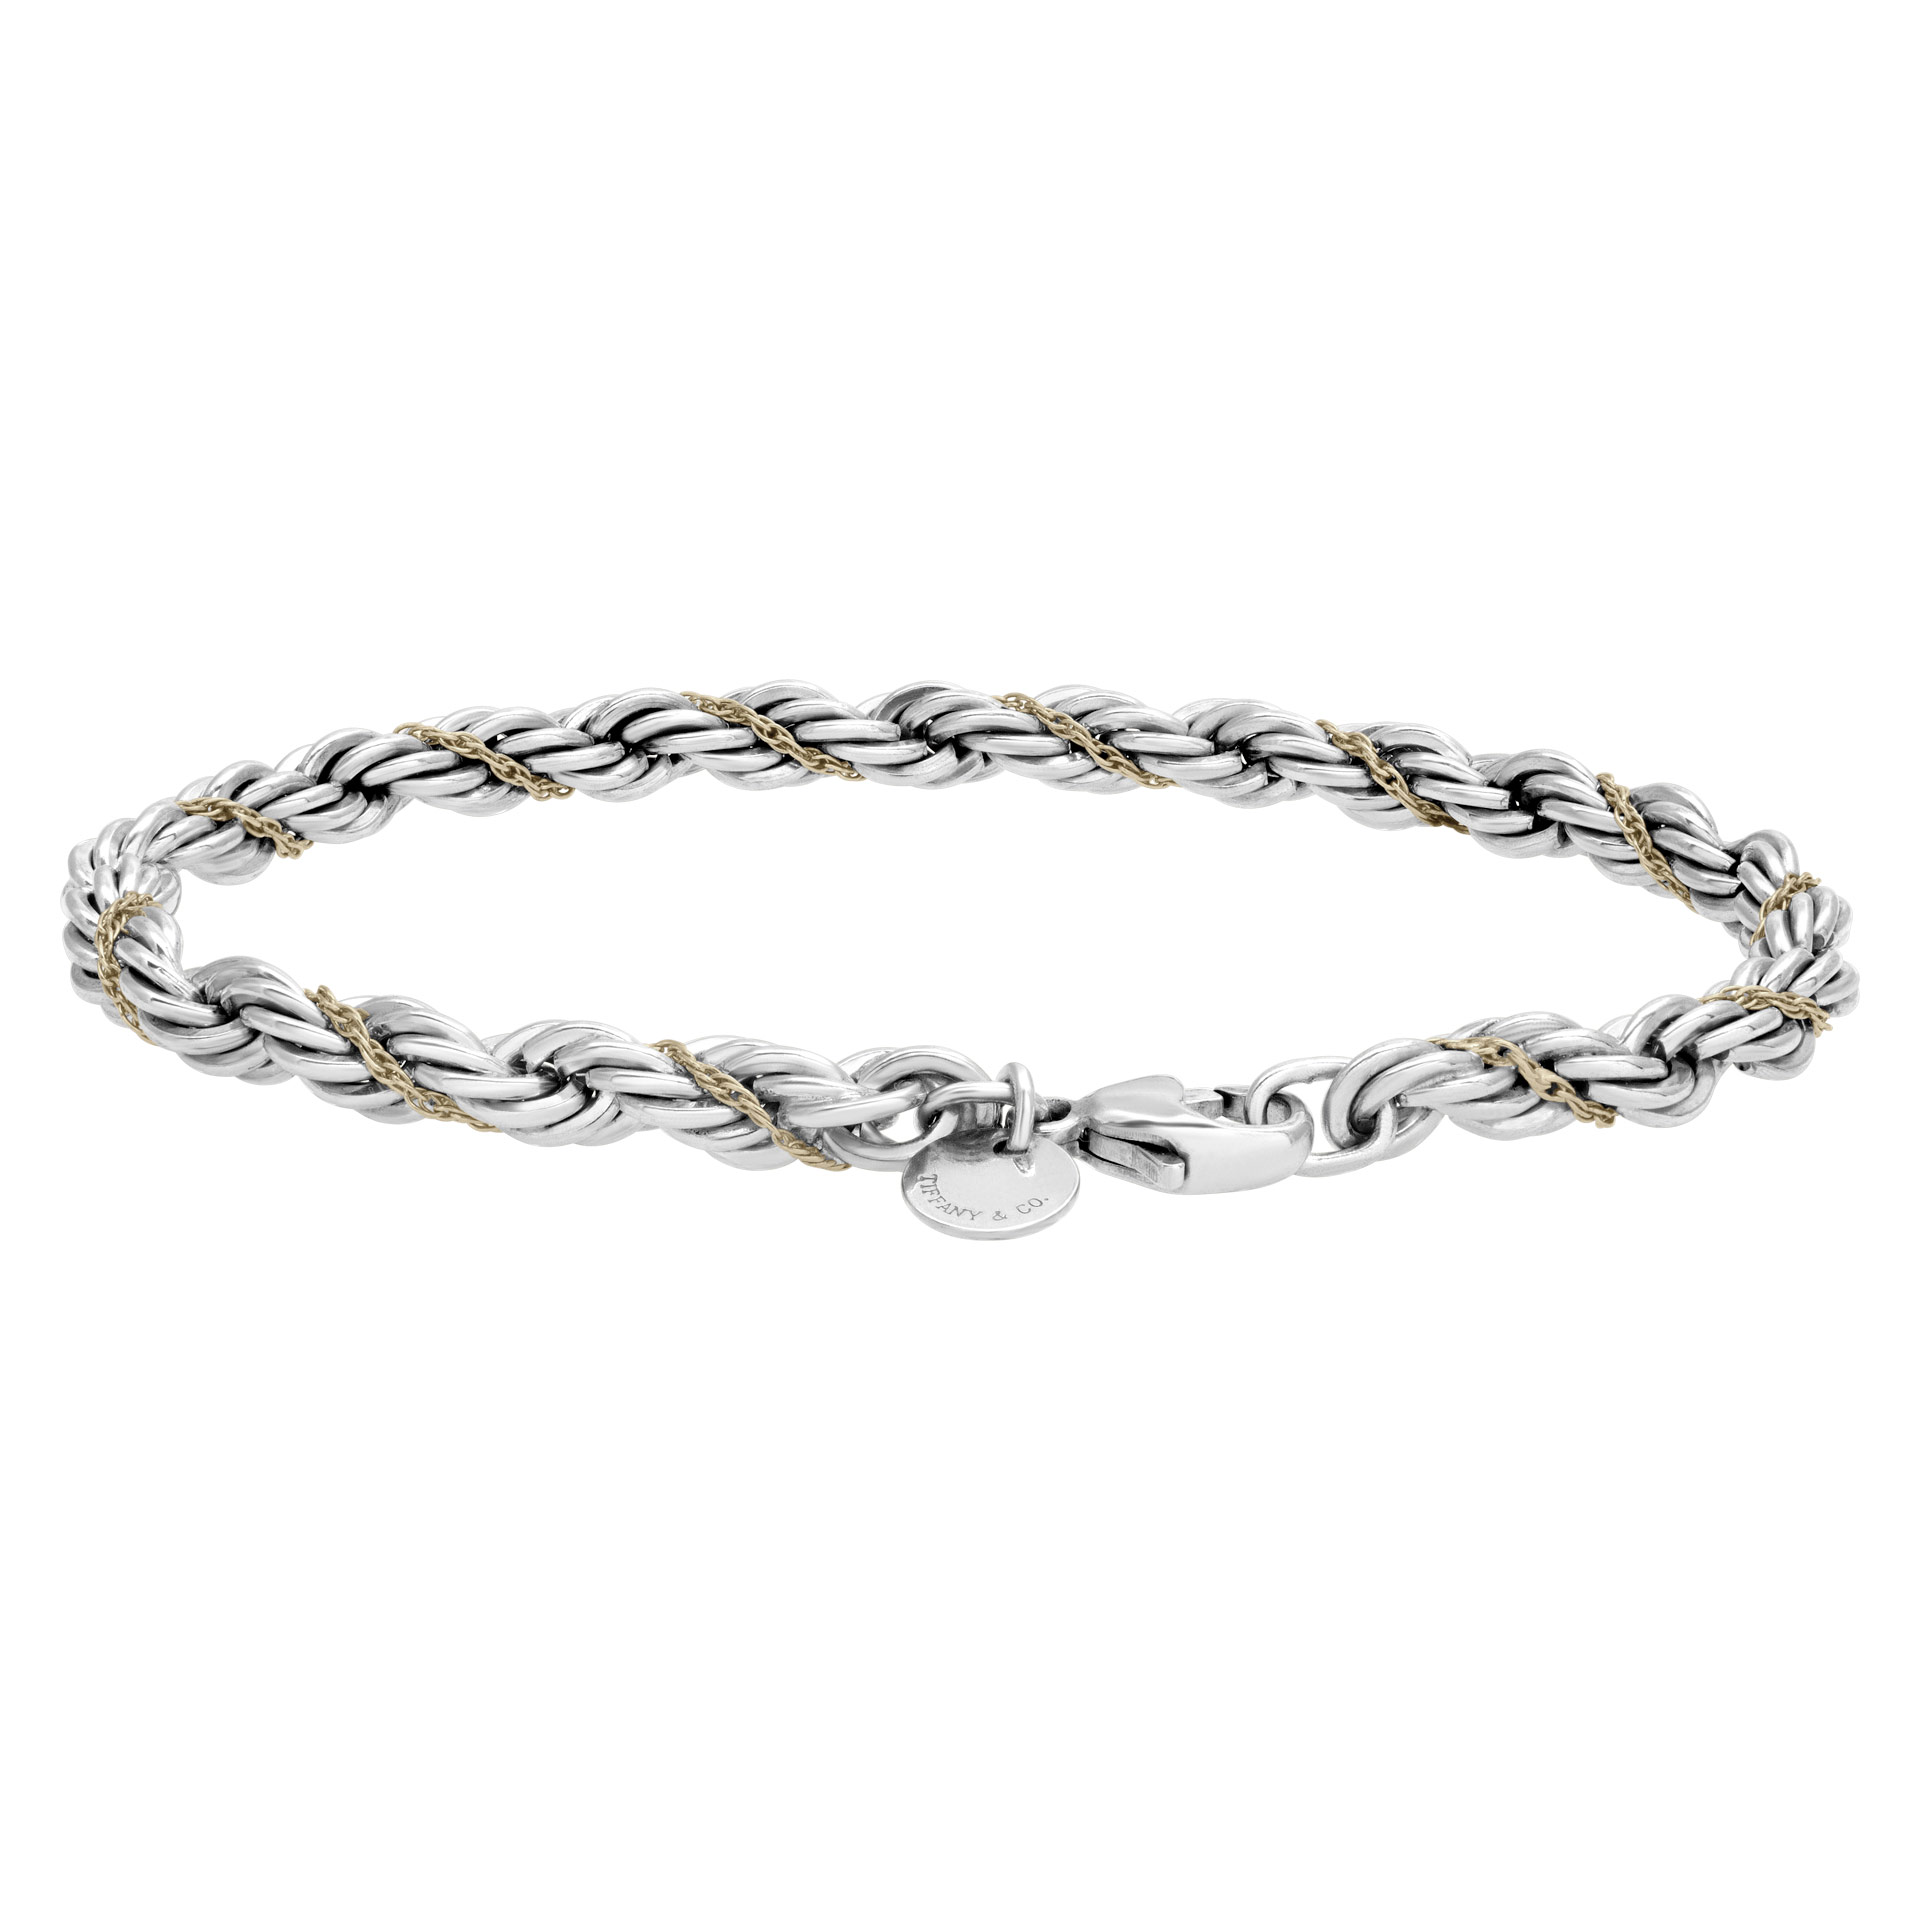 Tiffany \u0026 Co. twisted rope bracelet in 